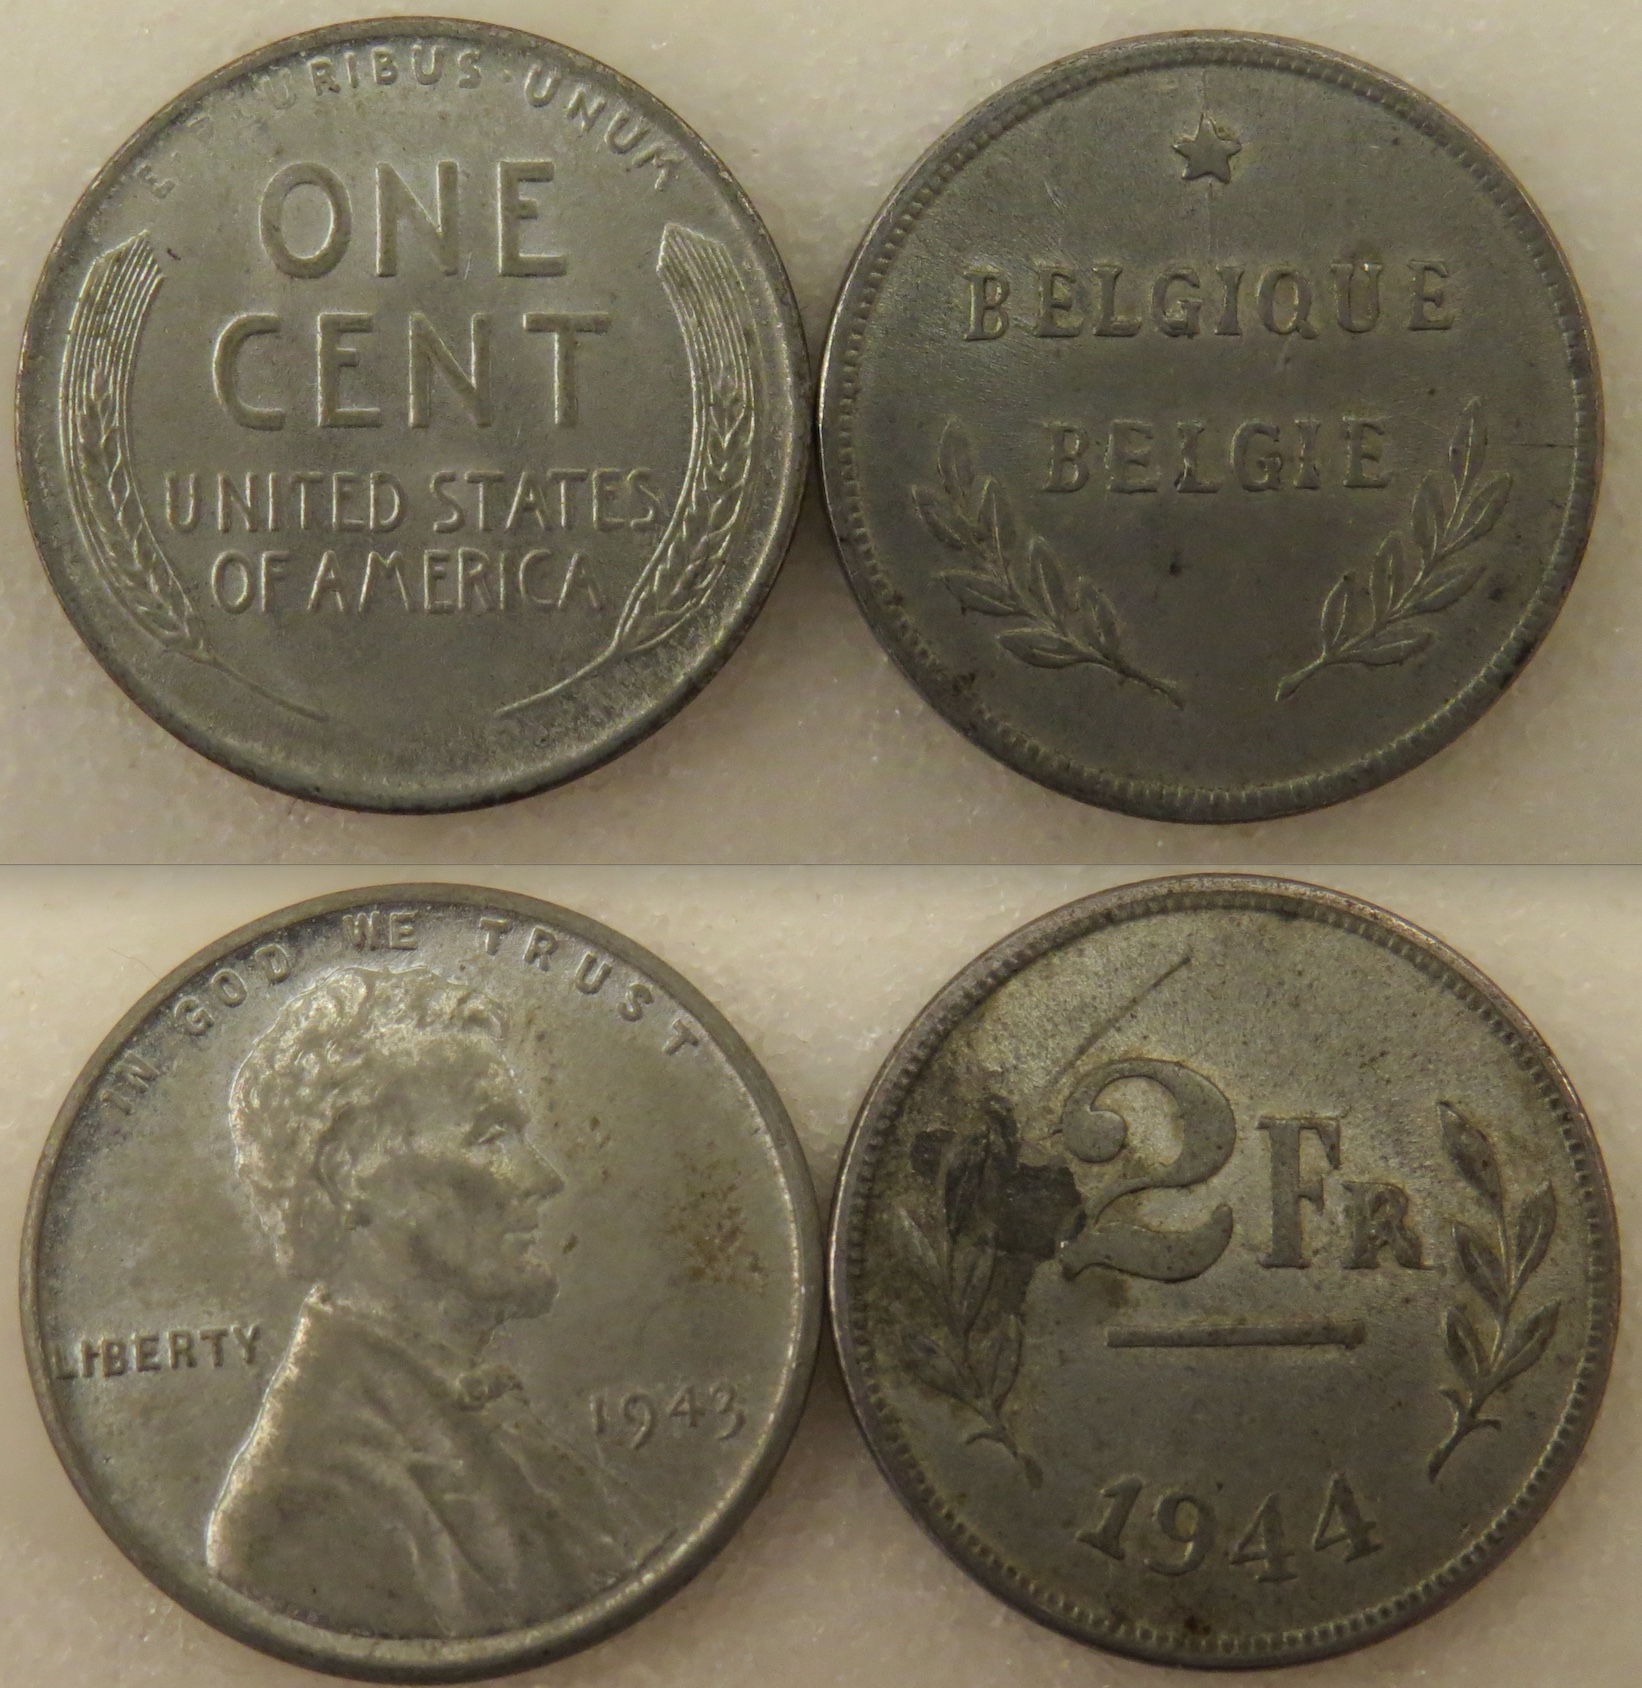 Belgium 1944 2 Fr and US 1943 Steel cent copy.jpeg